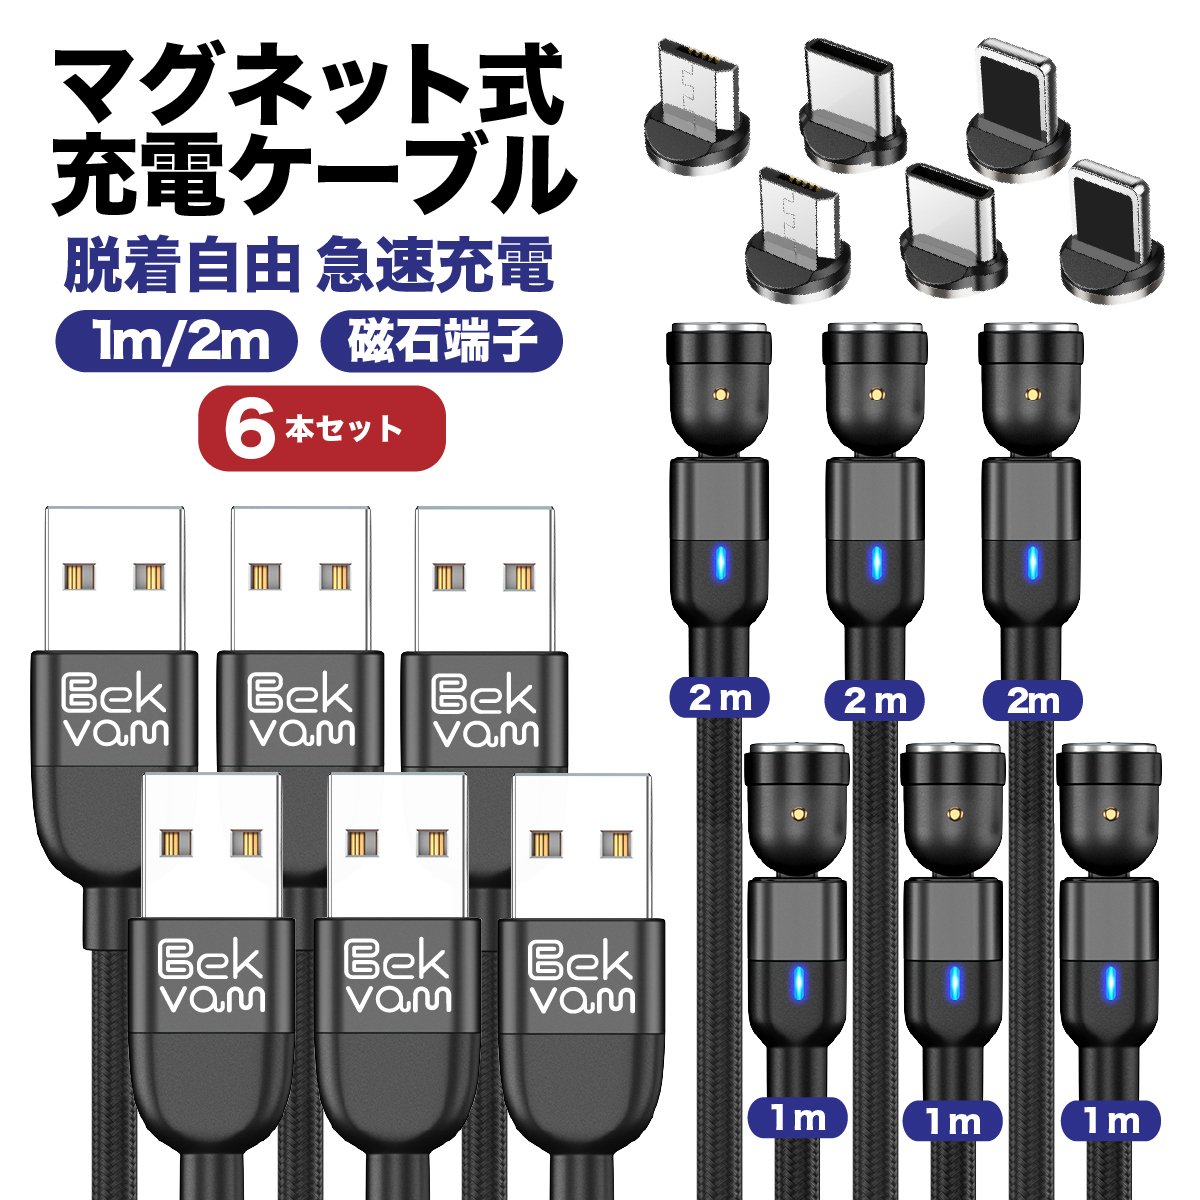 Bekvam マグネット式充電ケーブル  6本セット【送料無料】